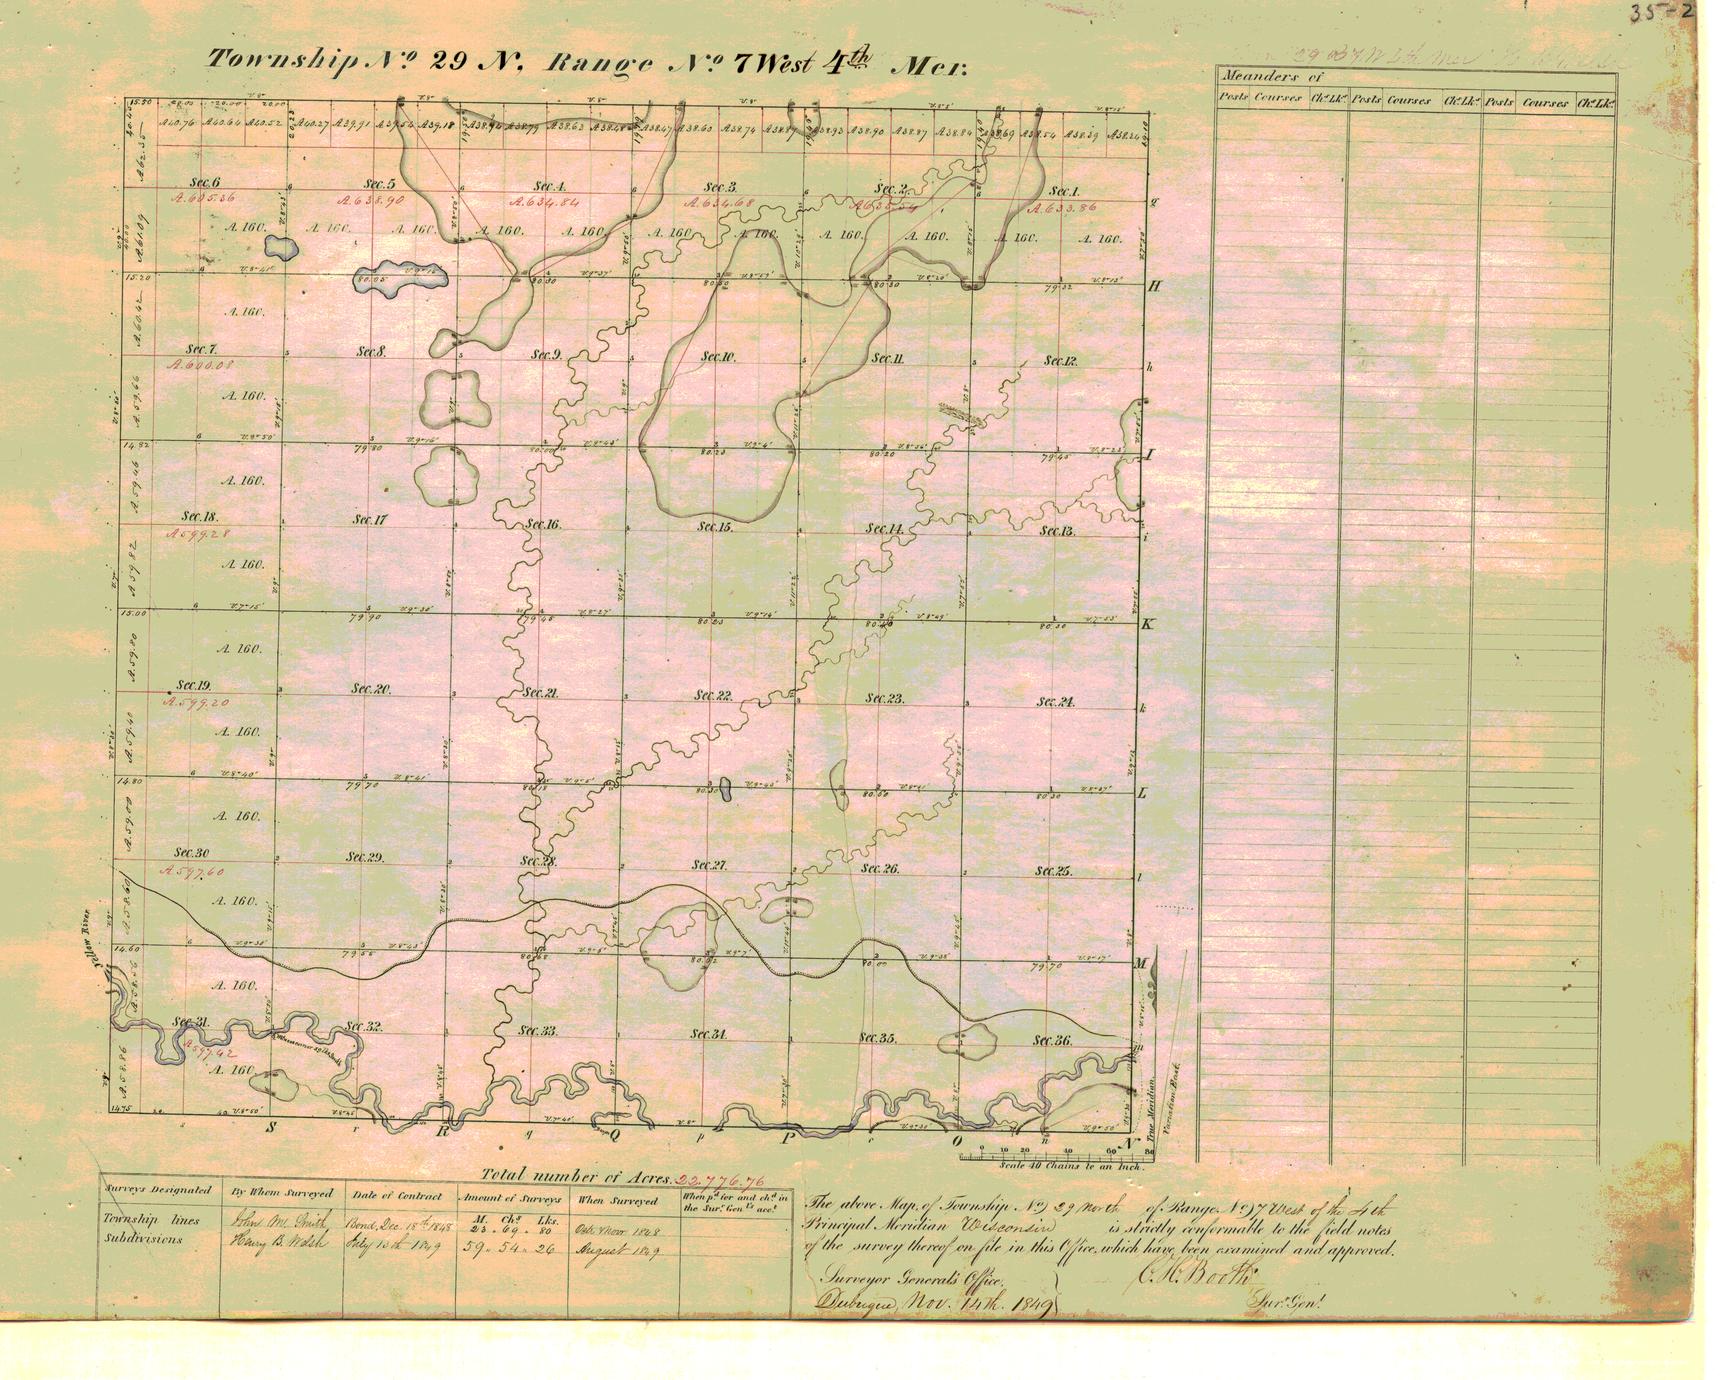 [Public Land Survey System map: Wisconsin Township 29 North, Range 07 West]